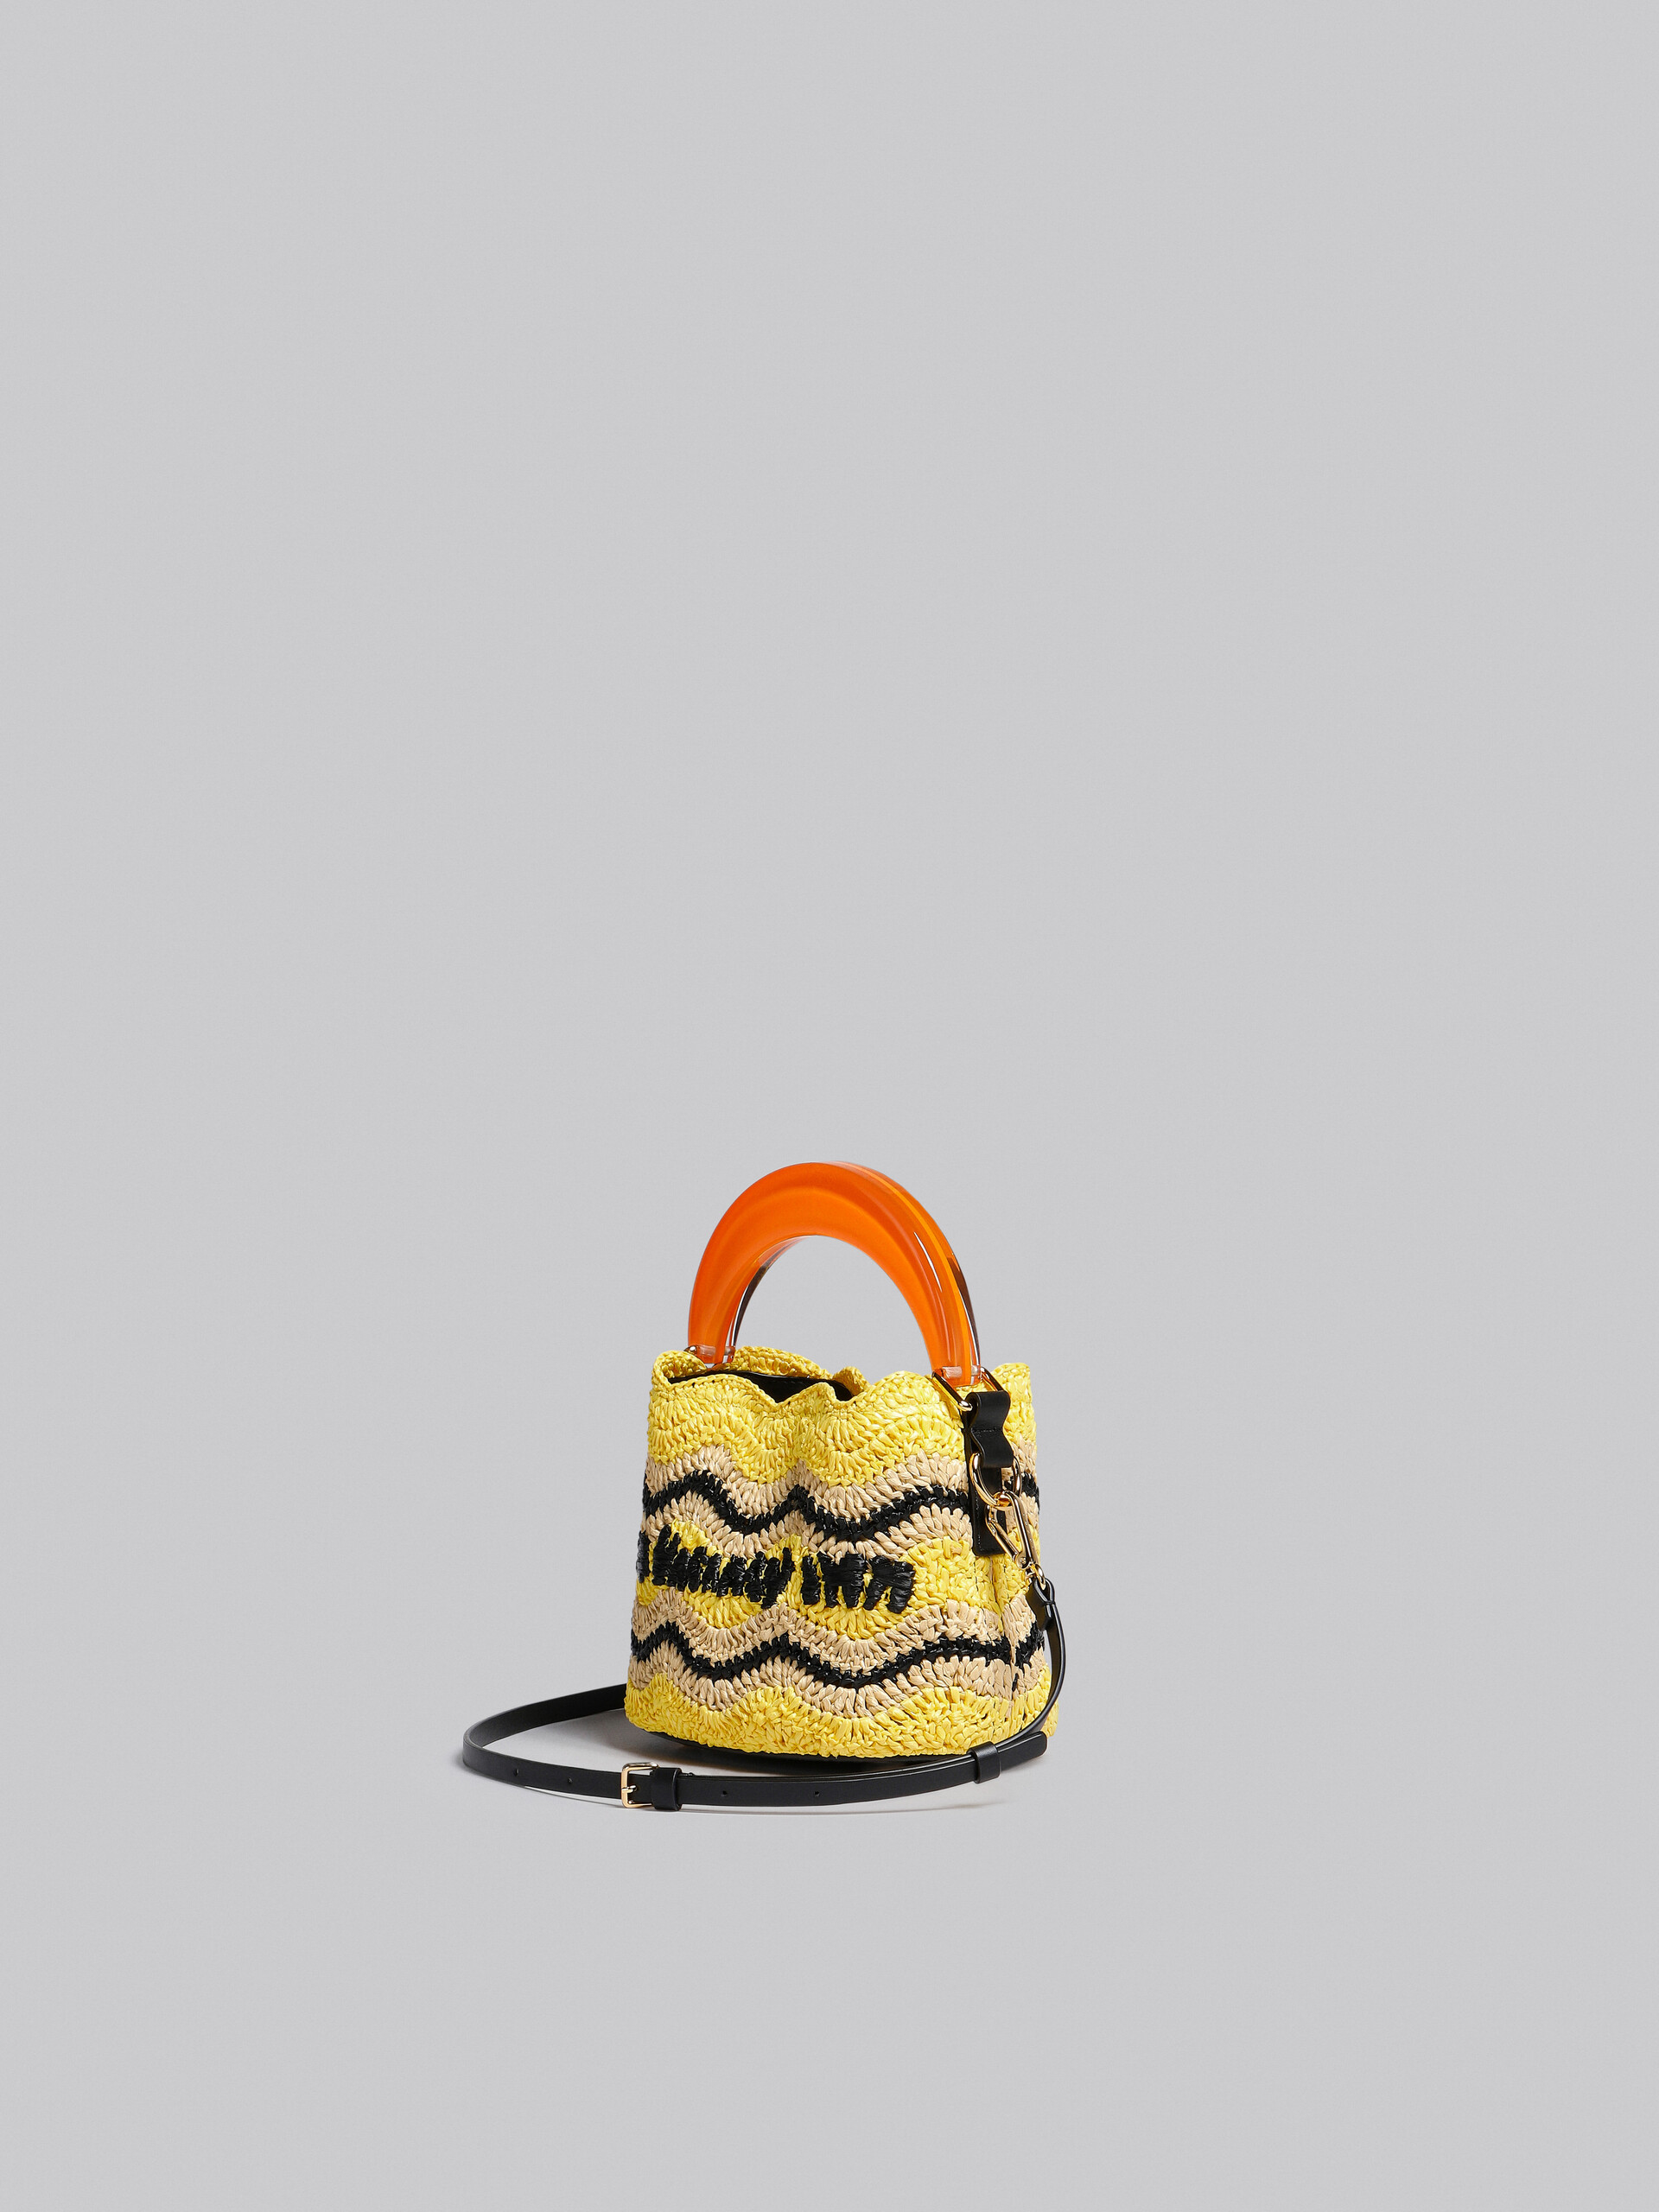 Marni x No Vacancy Inn - Venice Mini Bucket in yellow crochet raffia - Shoulder Bag - Image 3